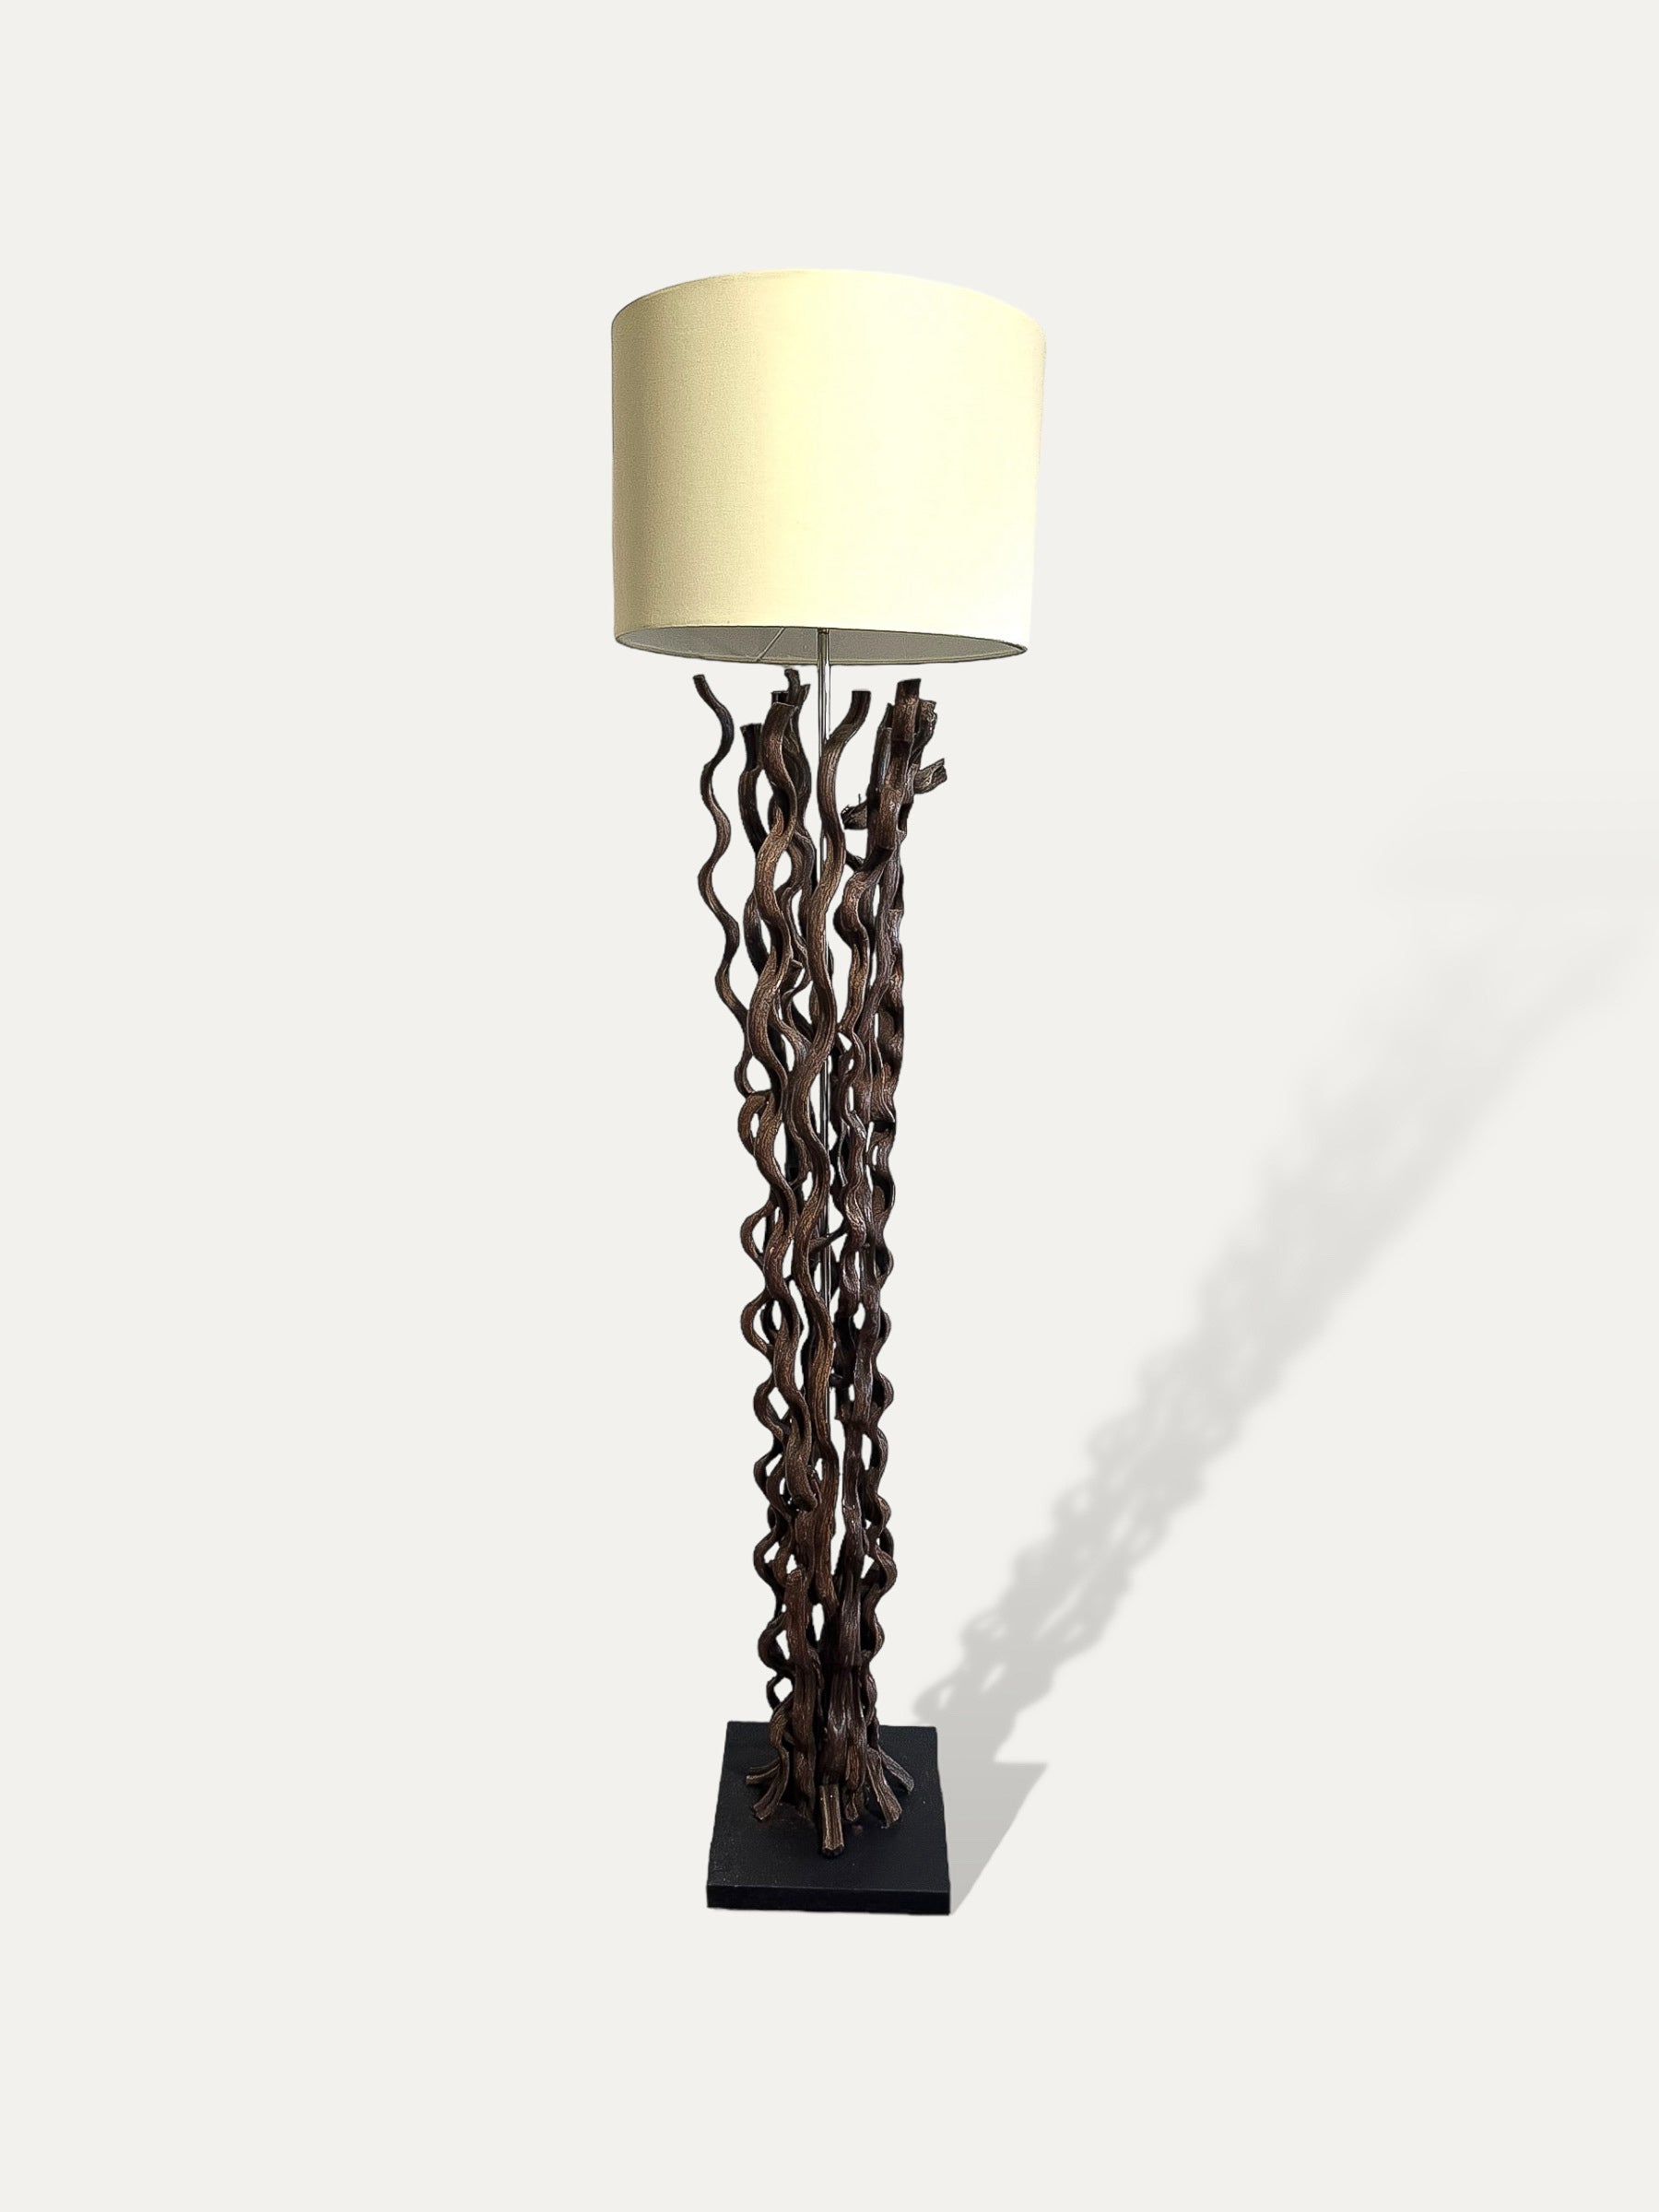 Lampe en bois exotique - Ombak